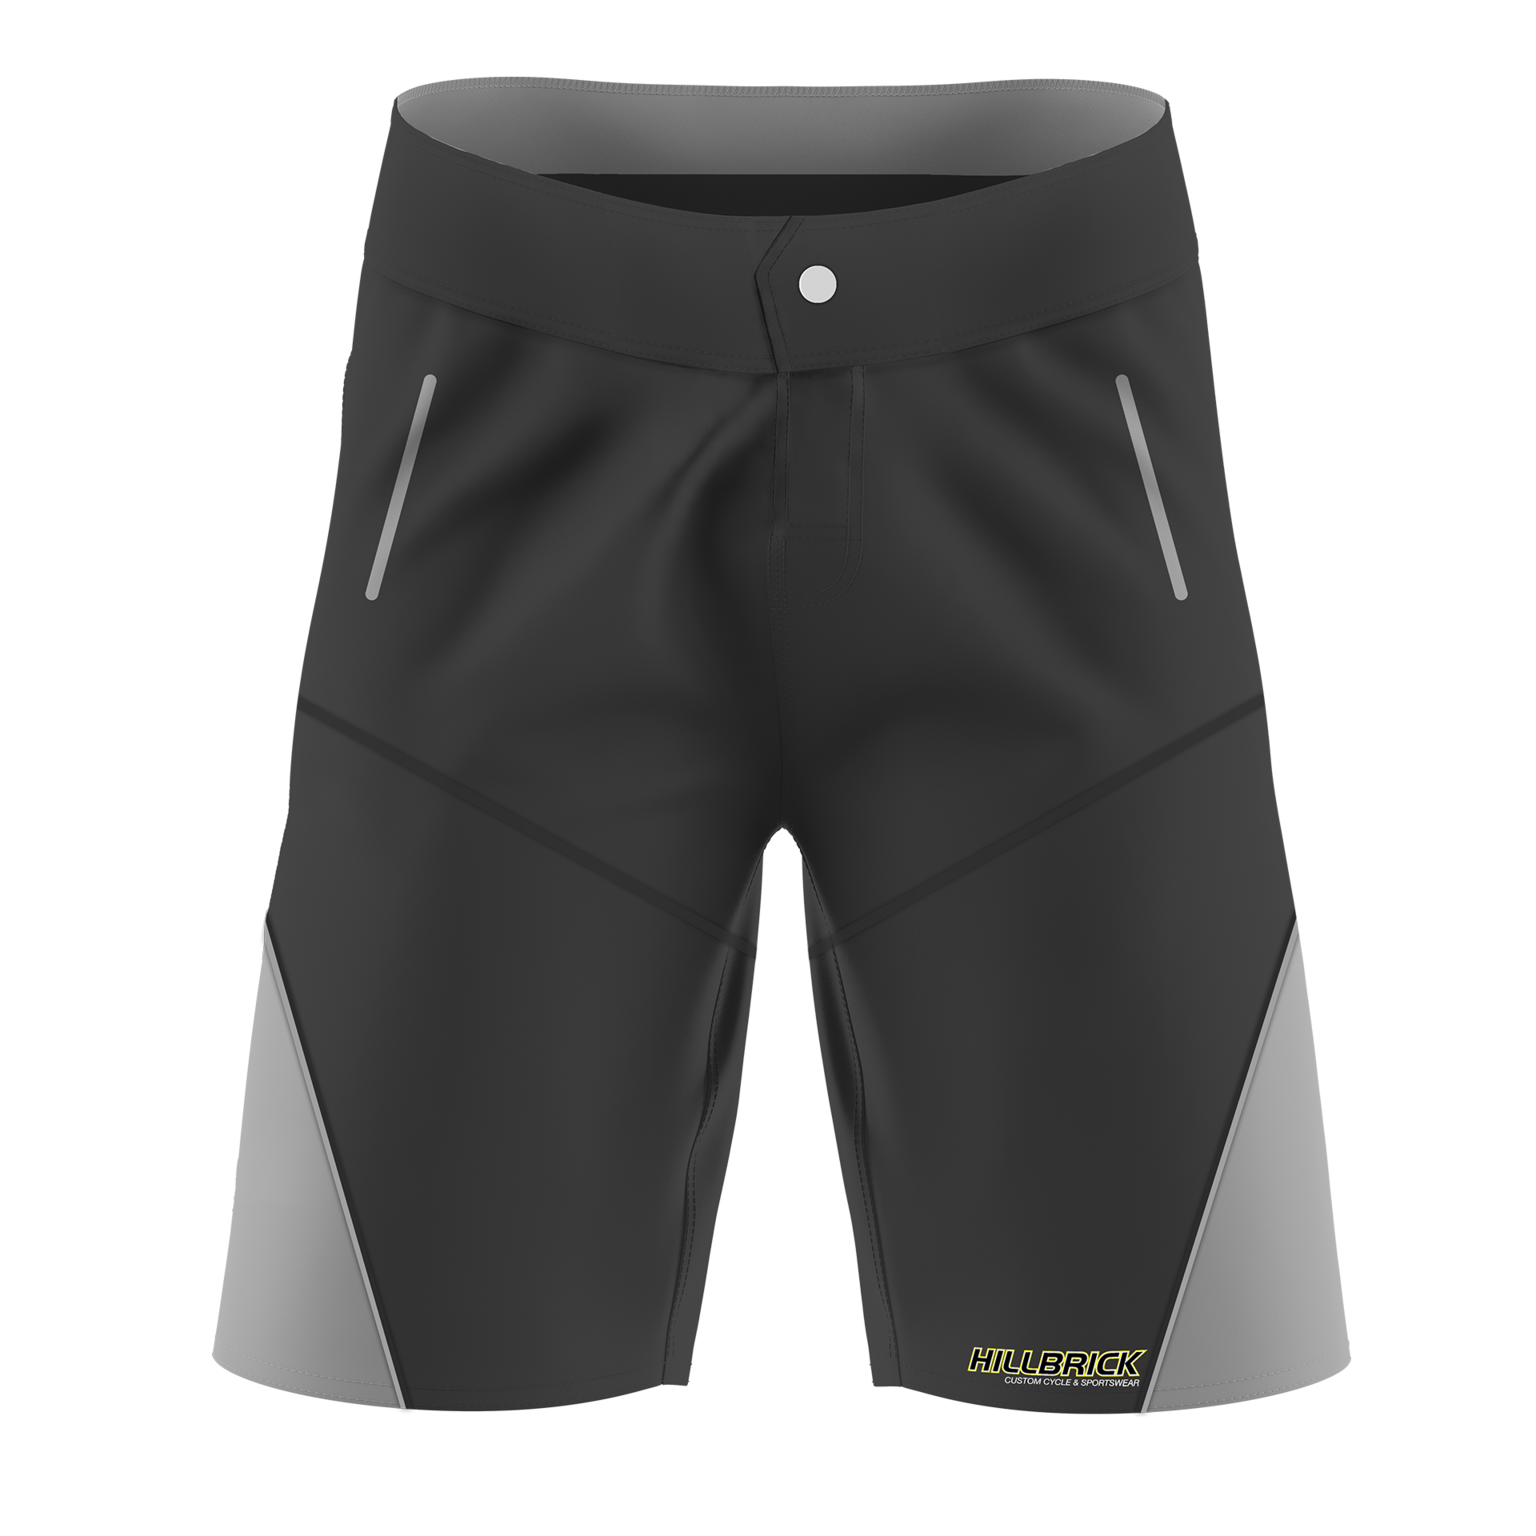 Hillbrick MTB Shorts